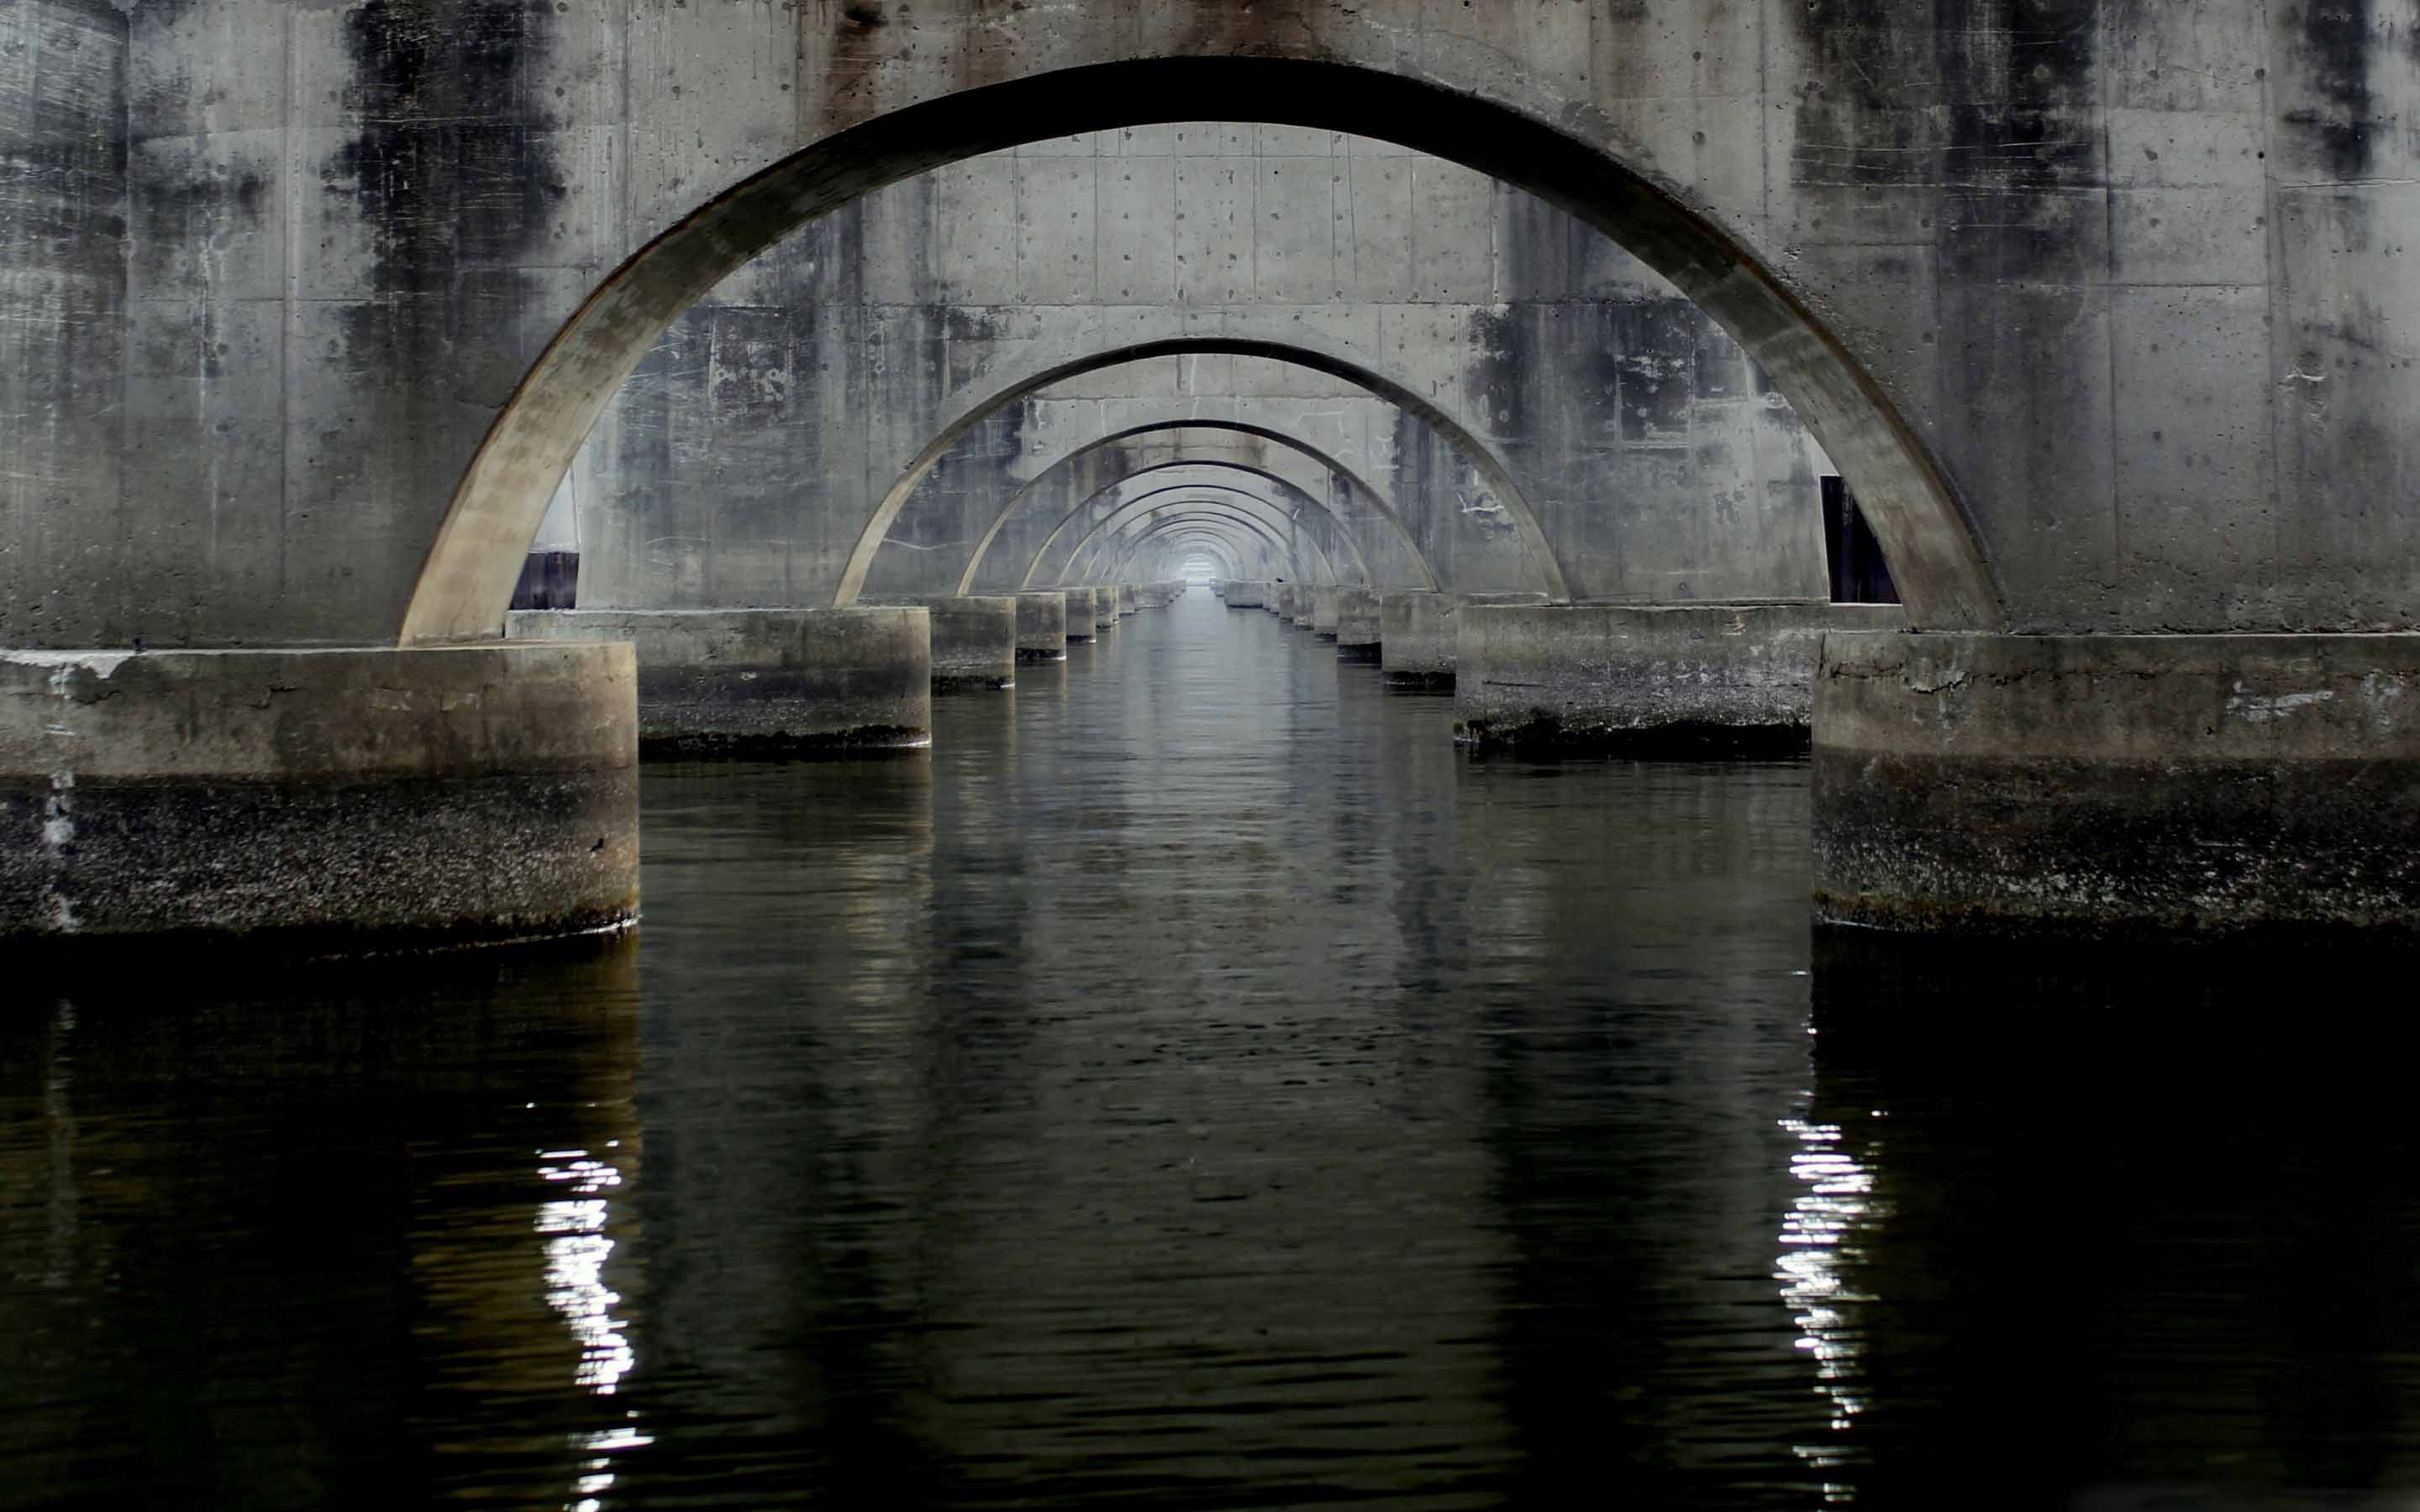 Арка в воде. Отражение моста в воде. Мост под водой. Арка под мостом. Отражение в воде.